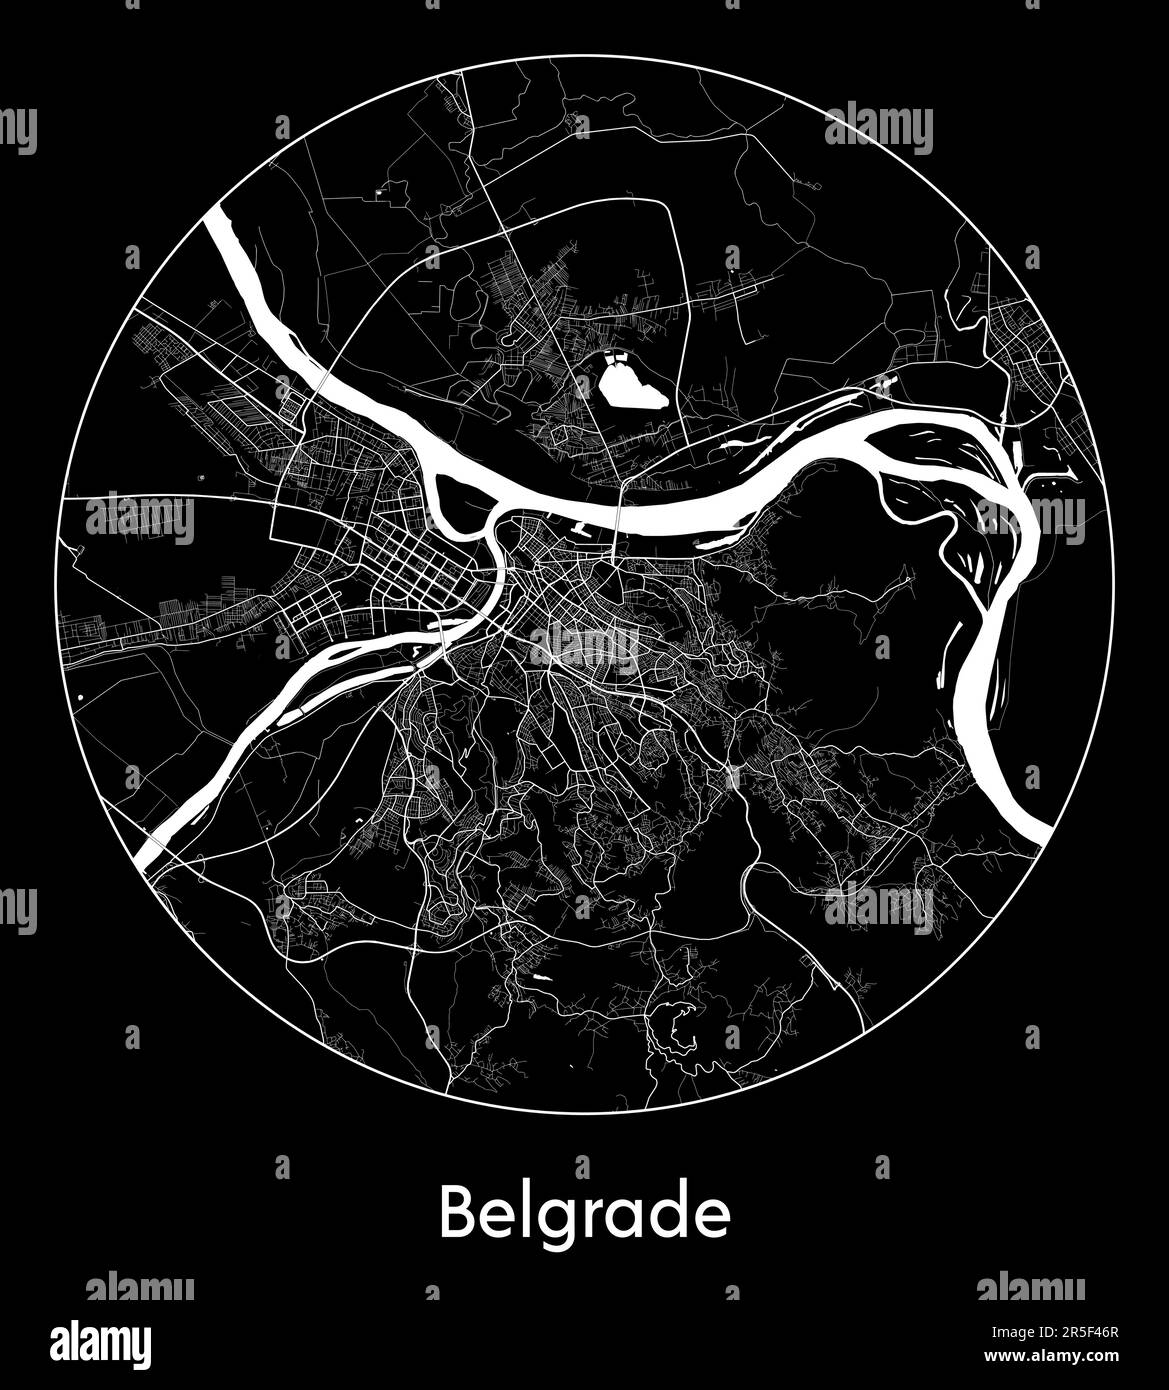 City Map Belgrade Serbia Europe vector illustration Stock Vector